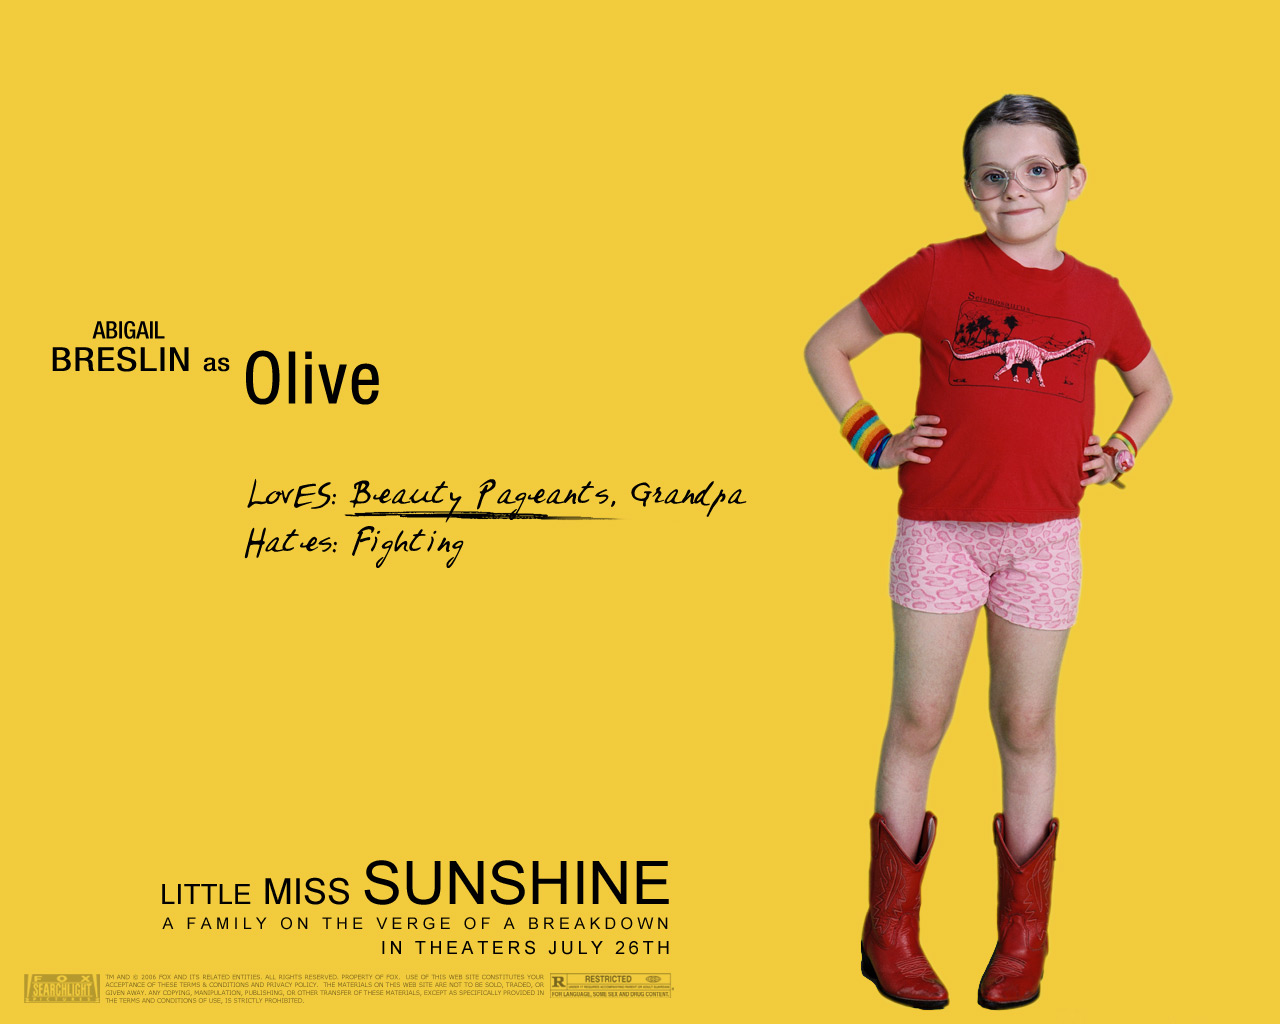 Film Analysis Of Little Miss Sunshine